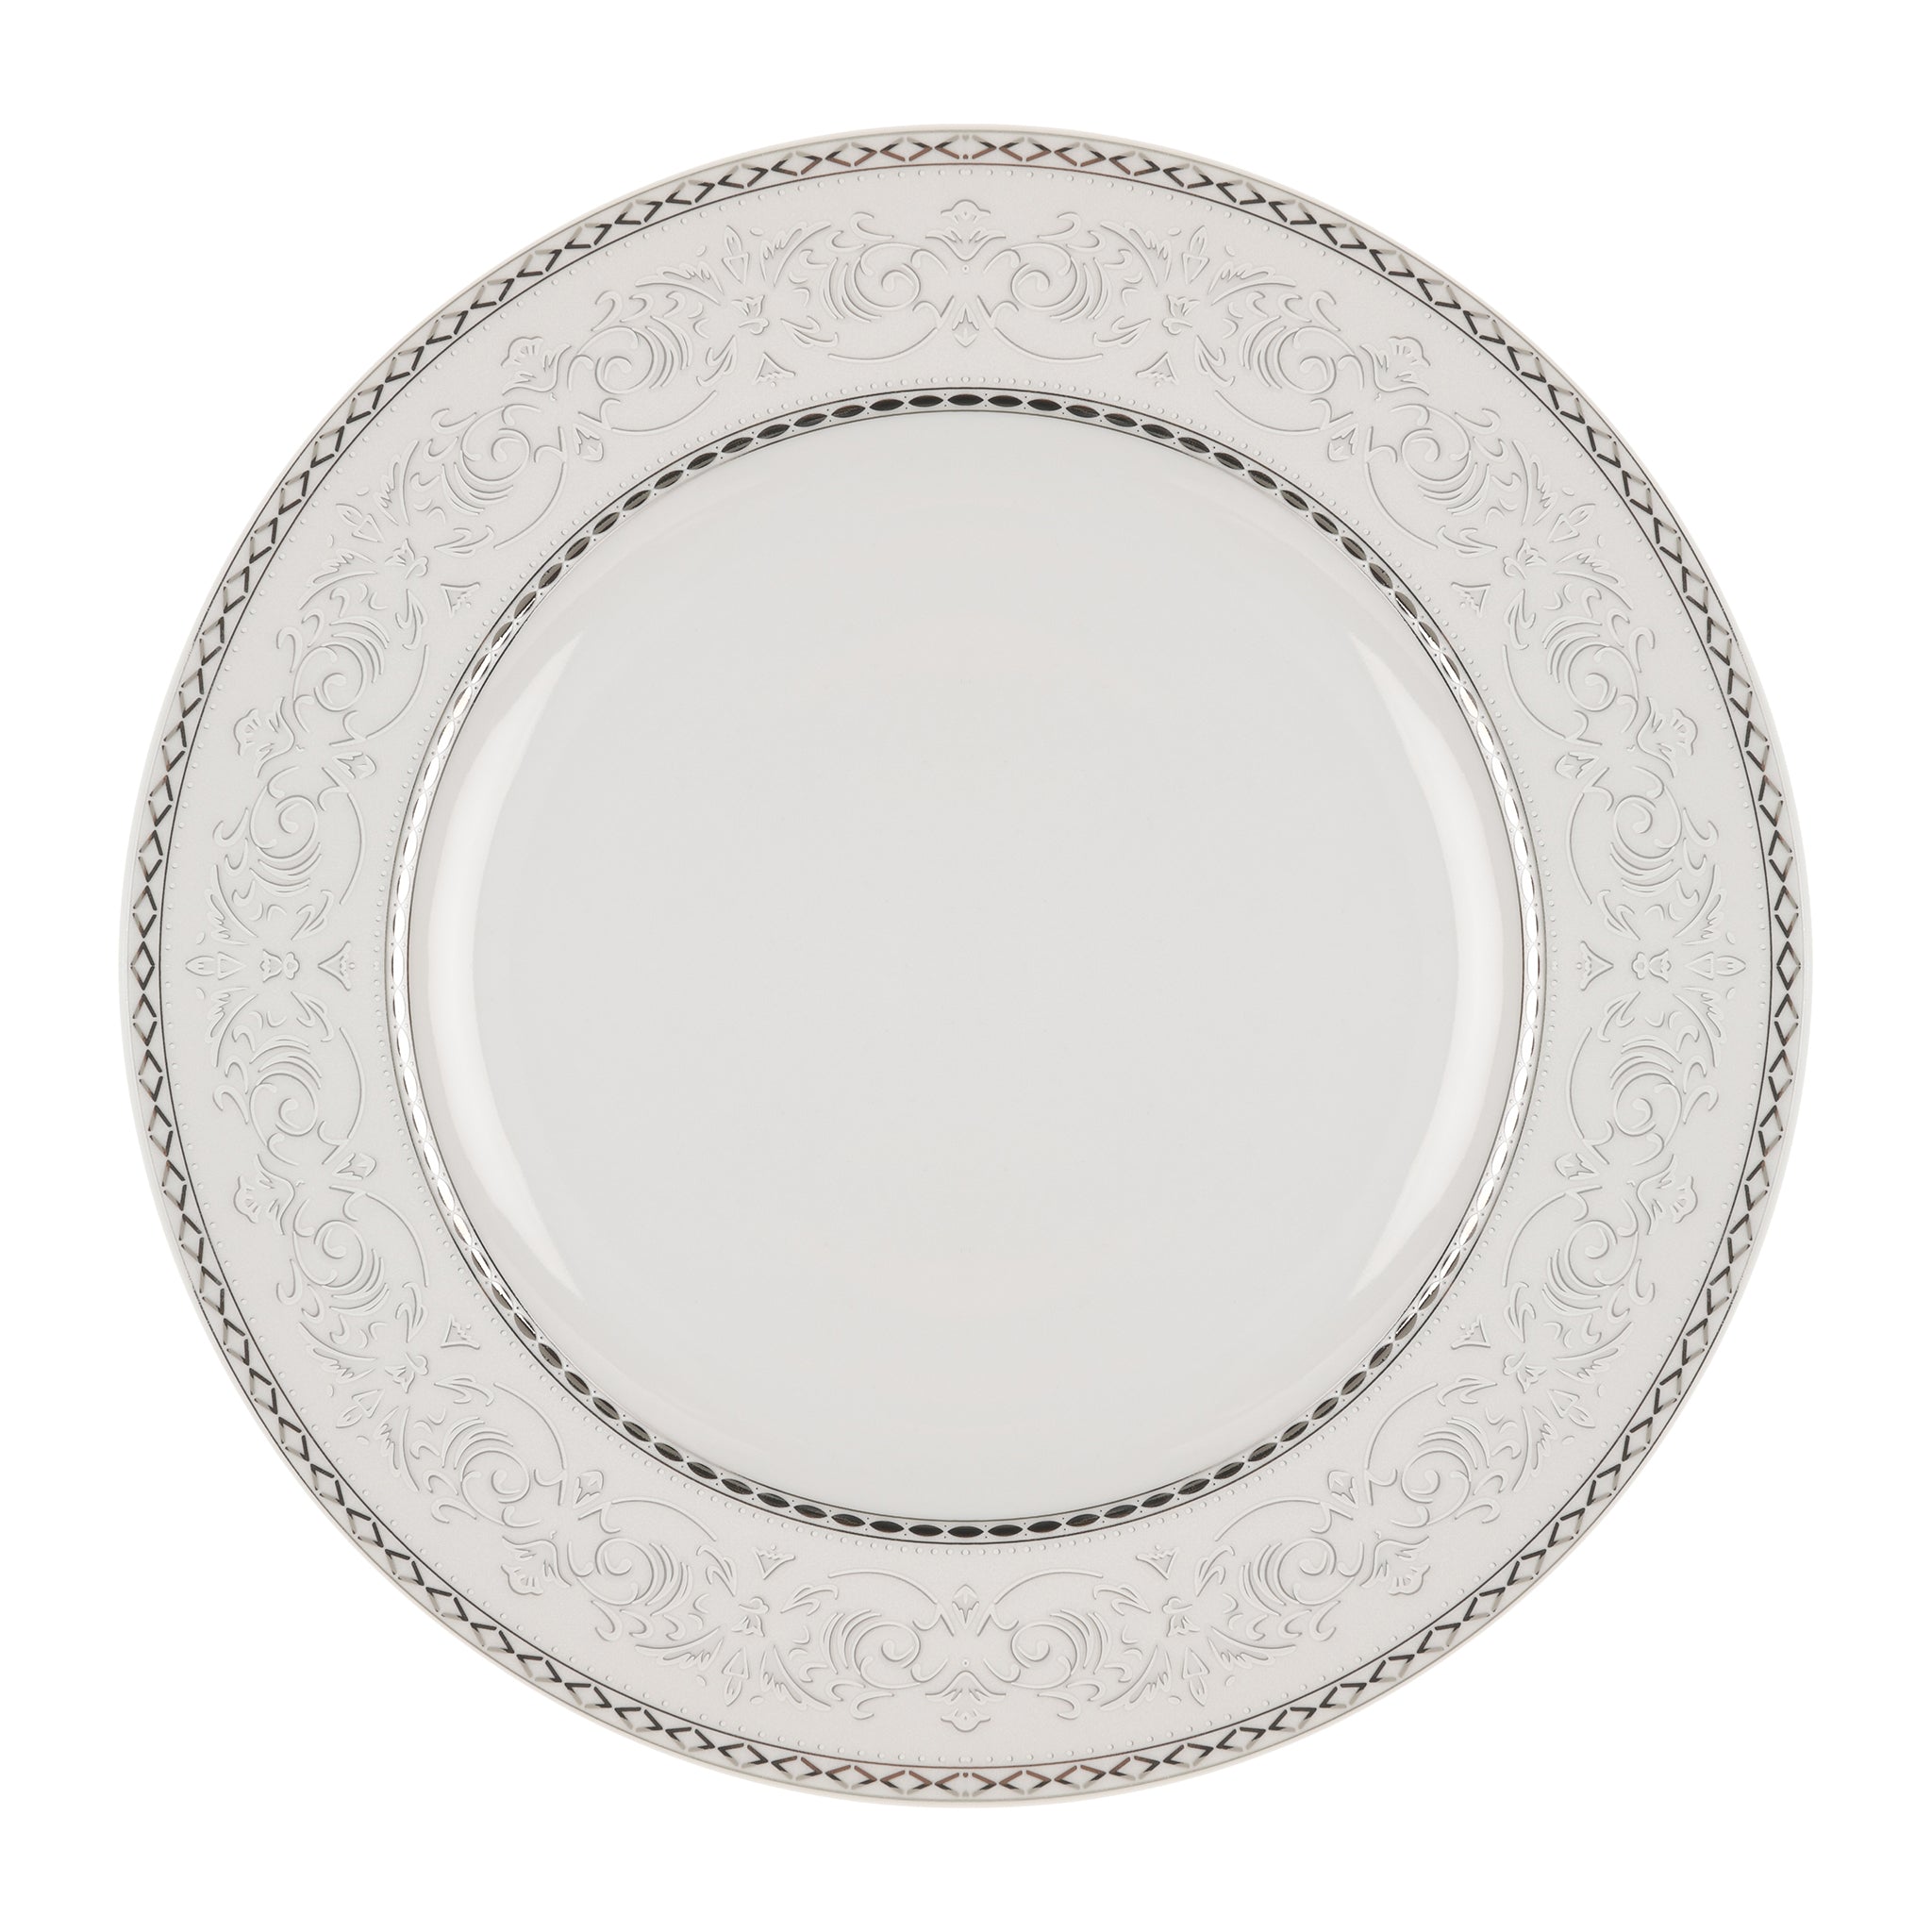 Elizabeth - Dinner Set 124 Pieces - Porcelain - Silver - 130001232